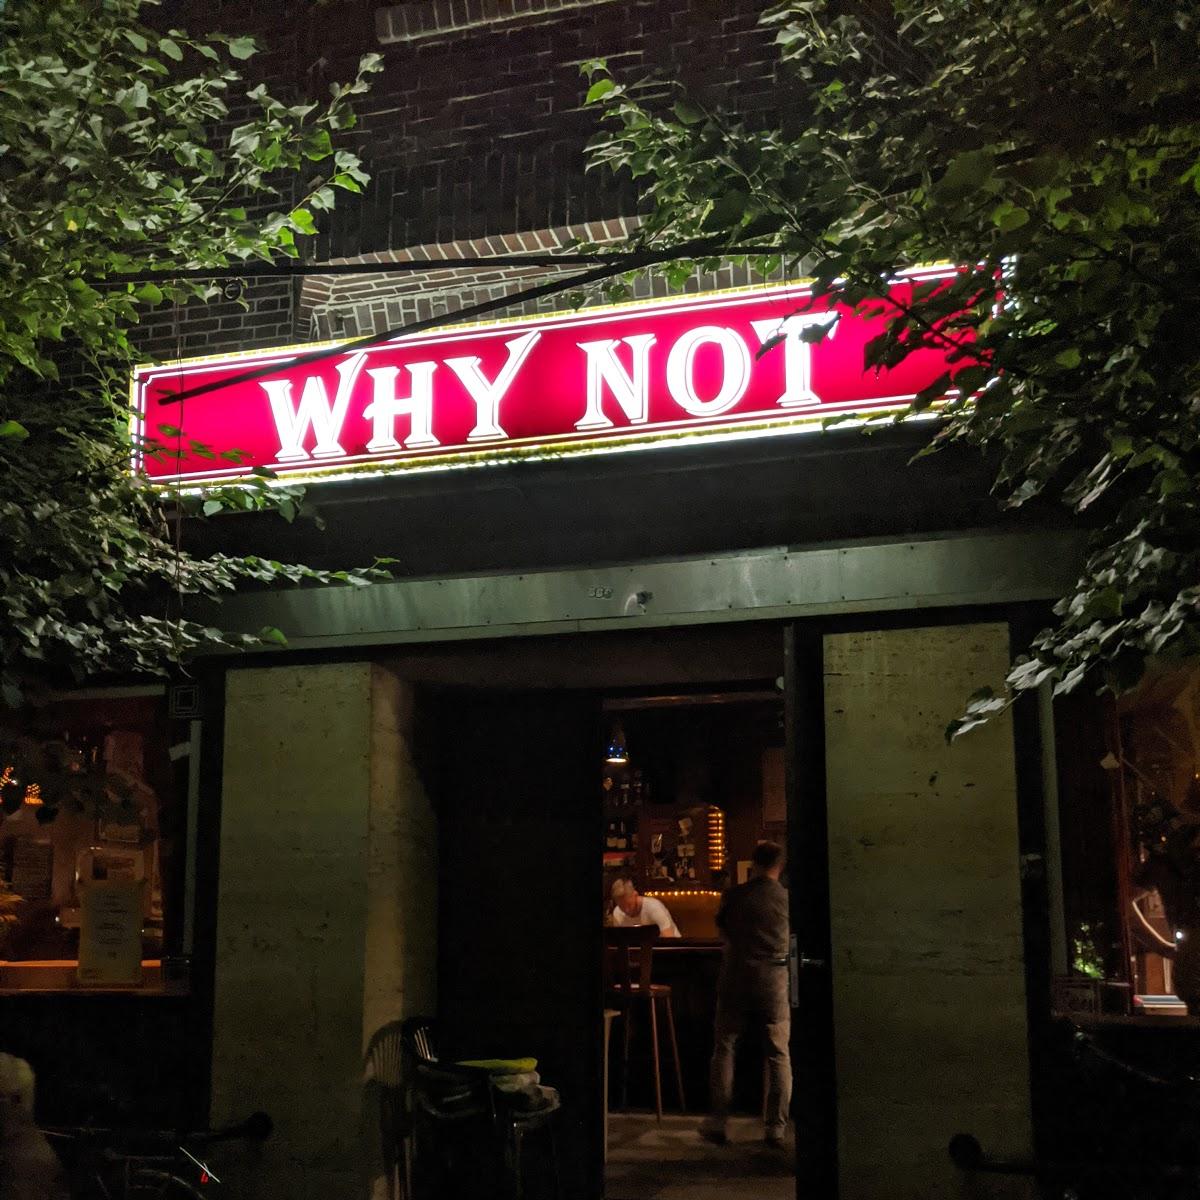 Restaurant "Why Not" in Papenburg